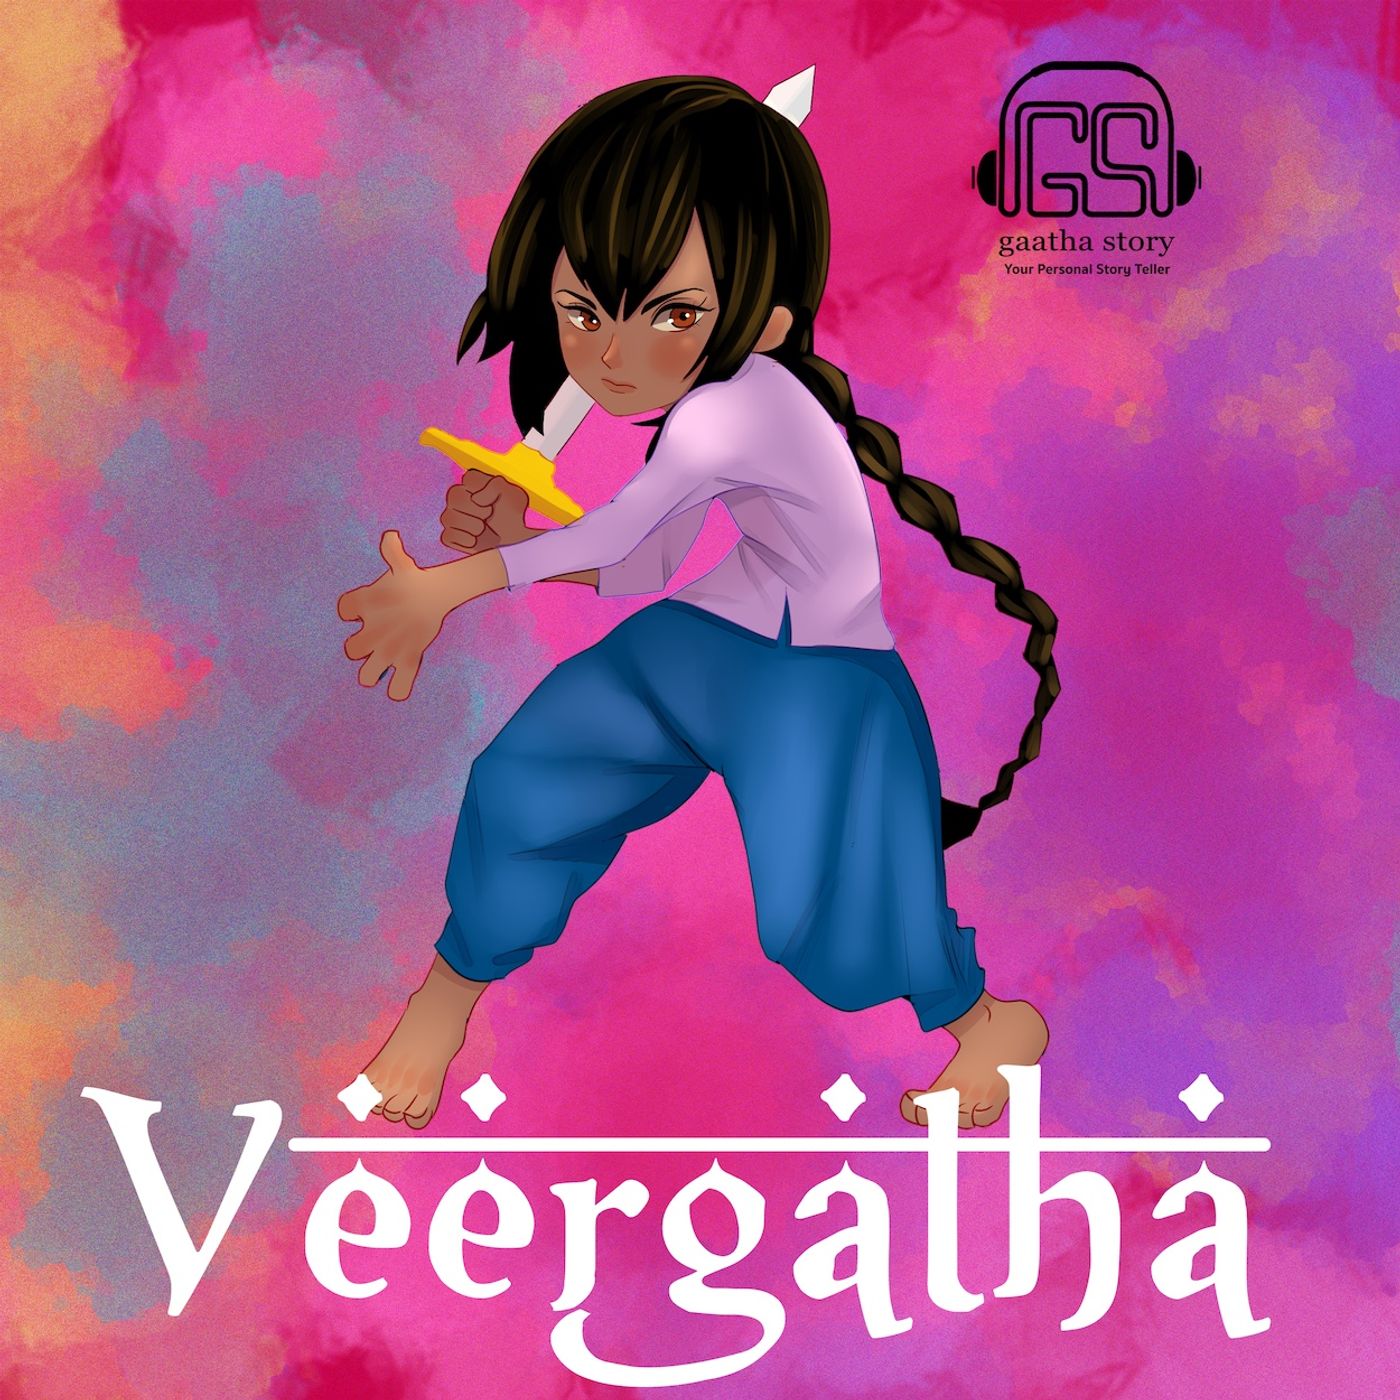 Veergatha: Stories of Bravery